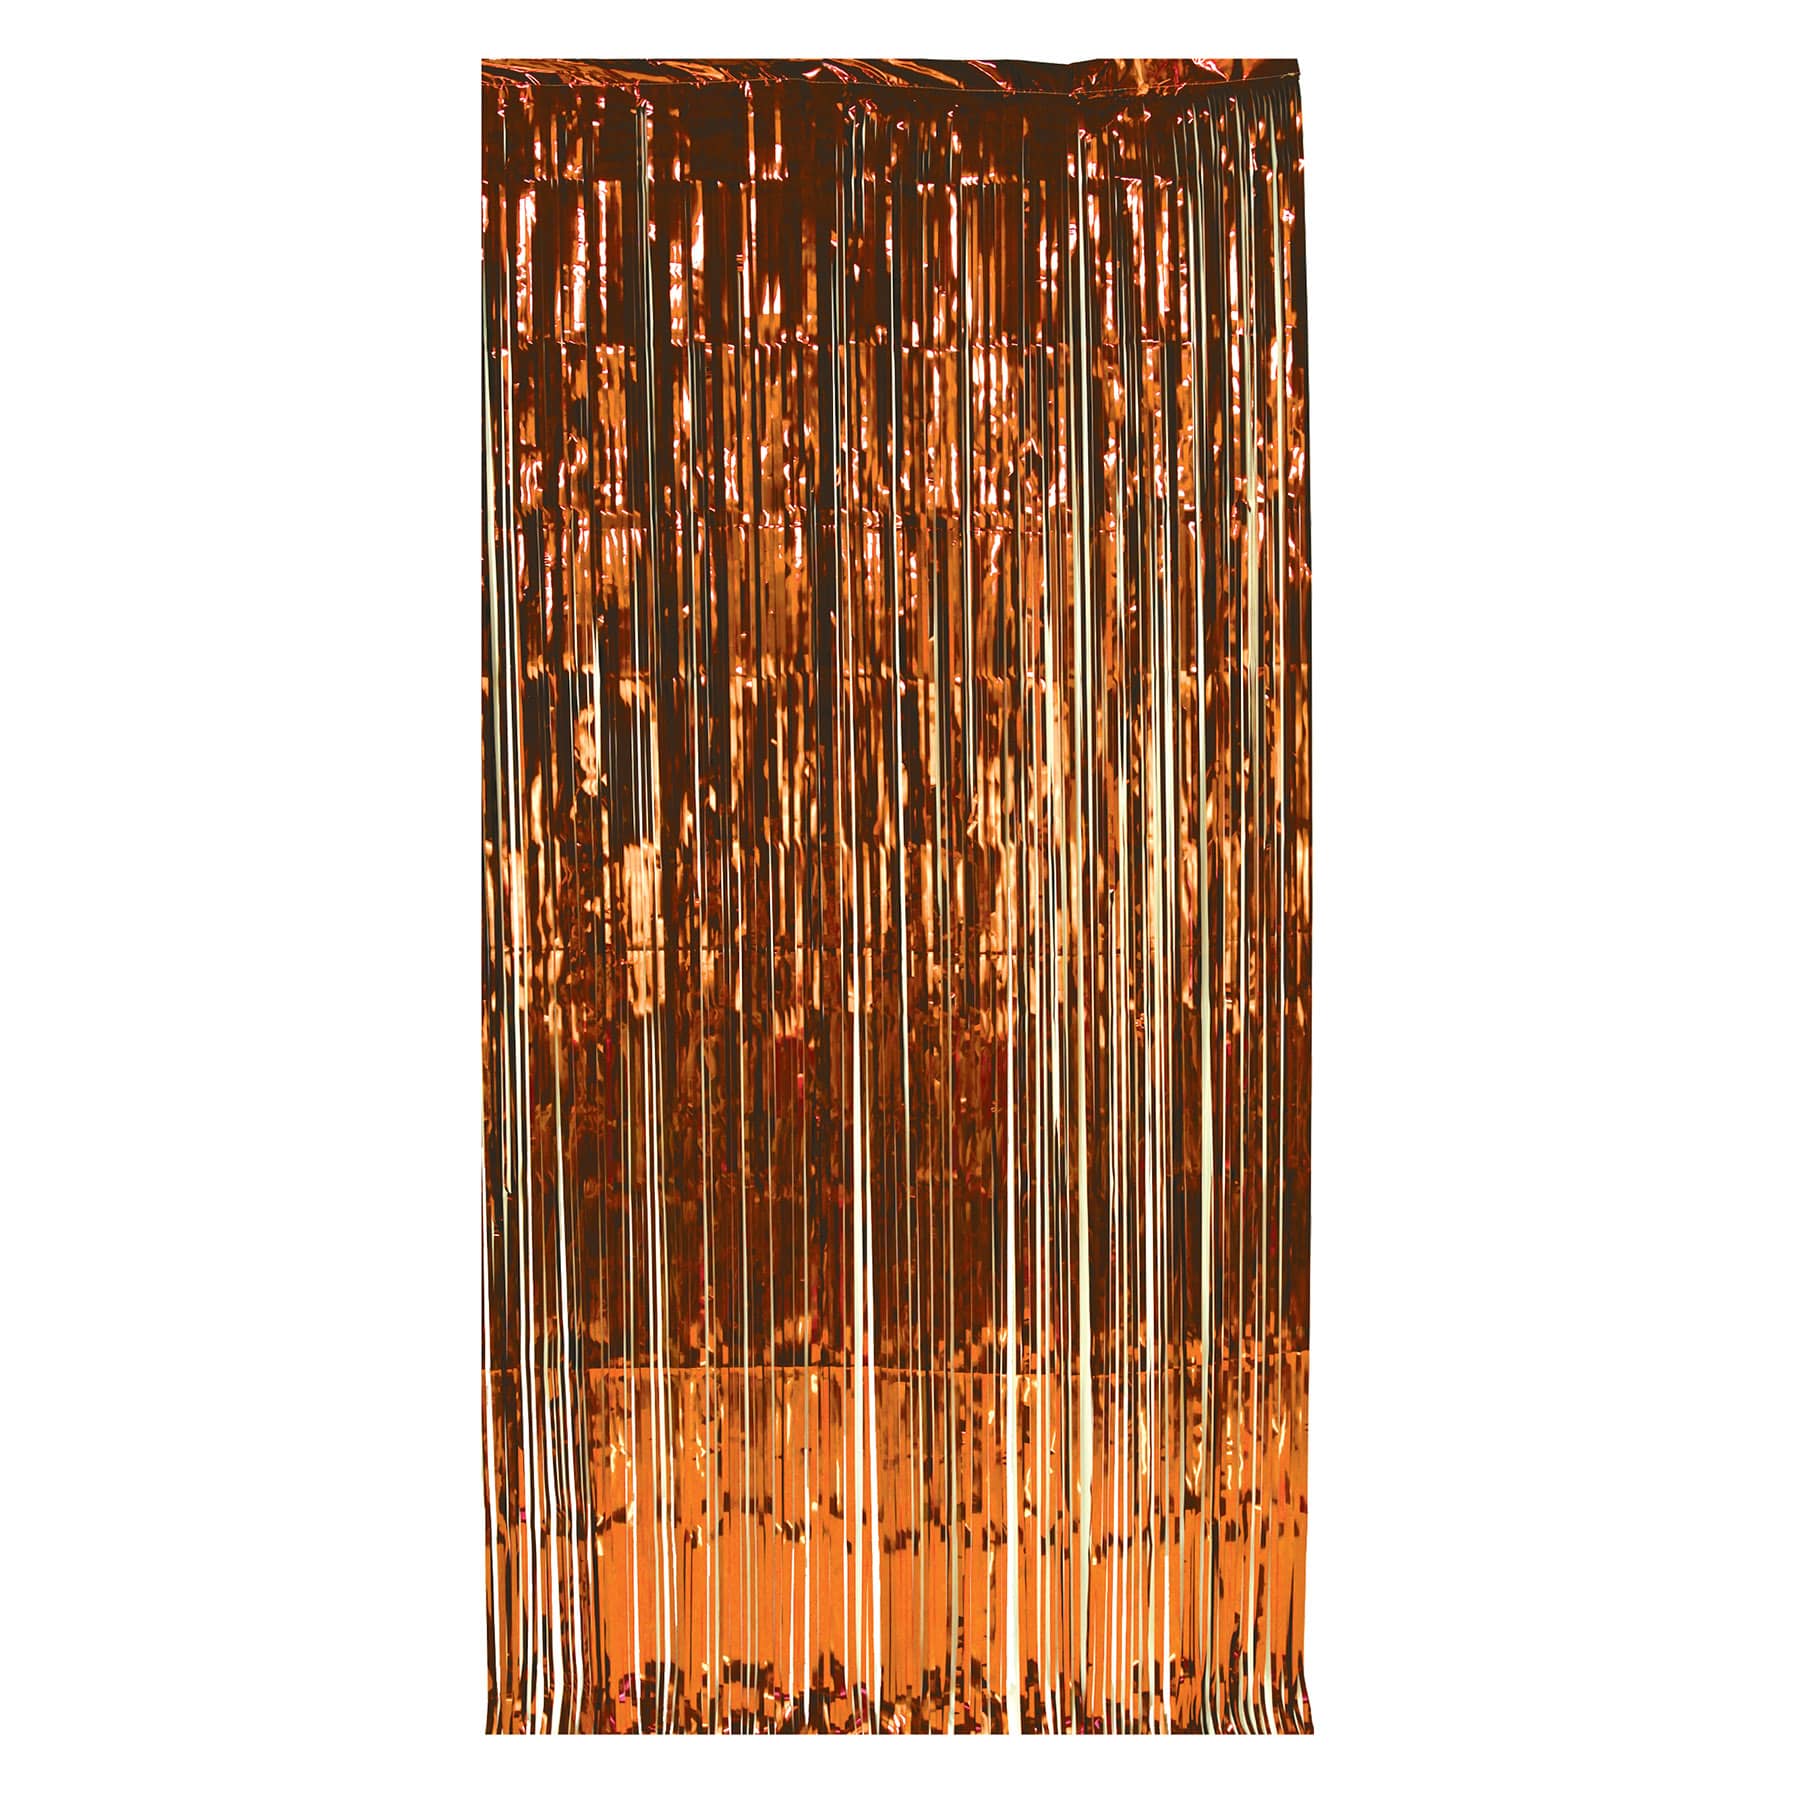 Orange Doorway Curtain made of metallic strands